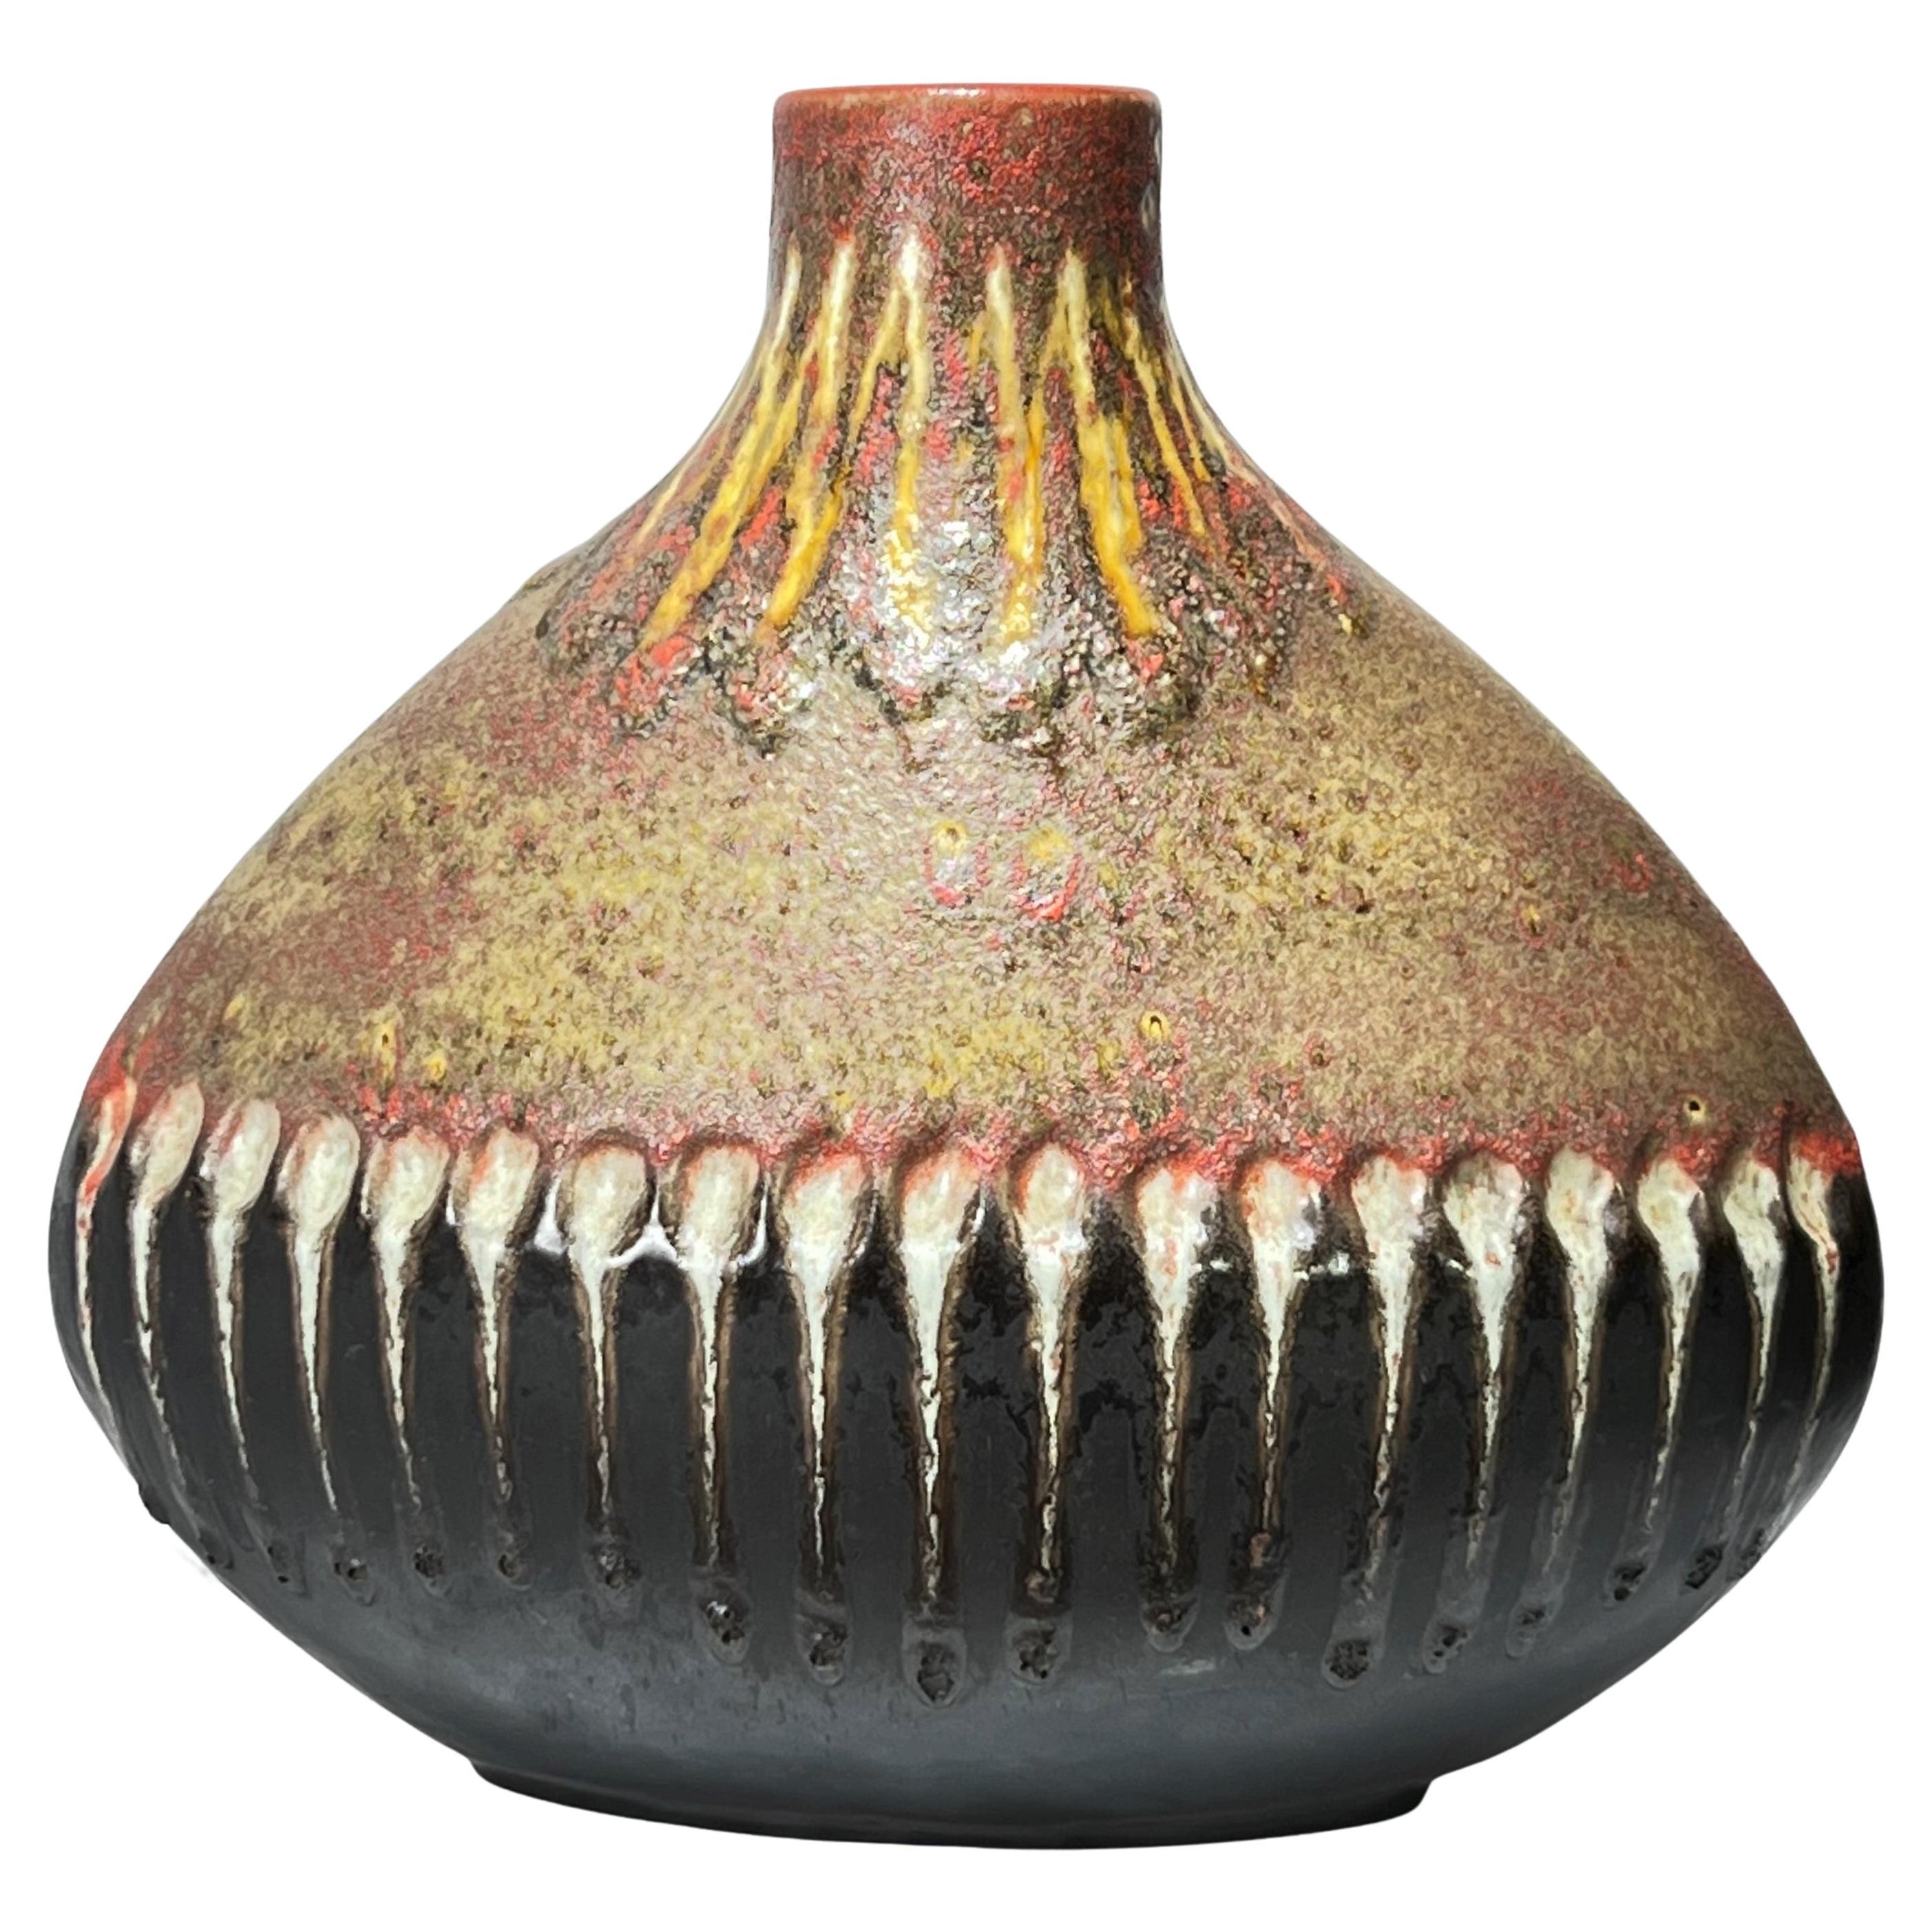 Huge Carstens Tönnieshof Fat Lava Vase with Extraordinary Sculptural Form, C1970